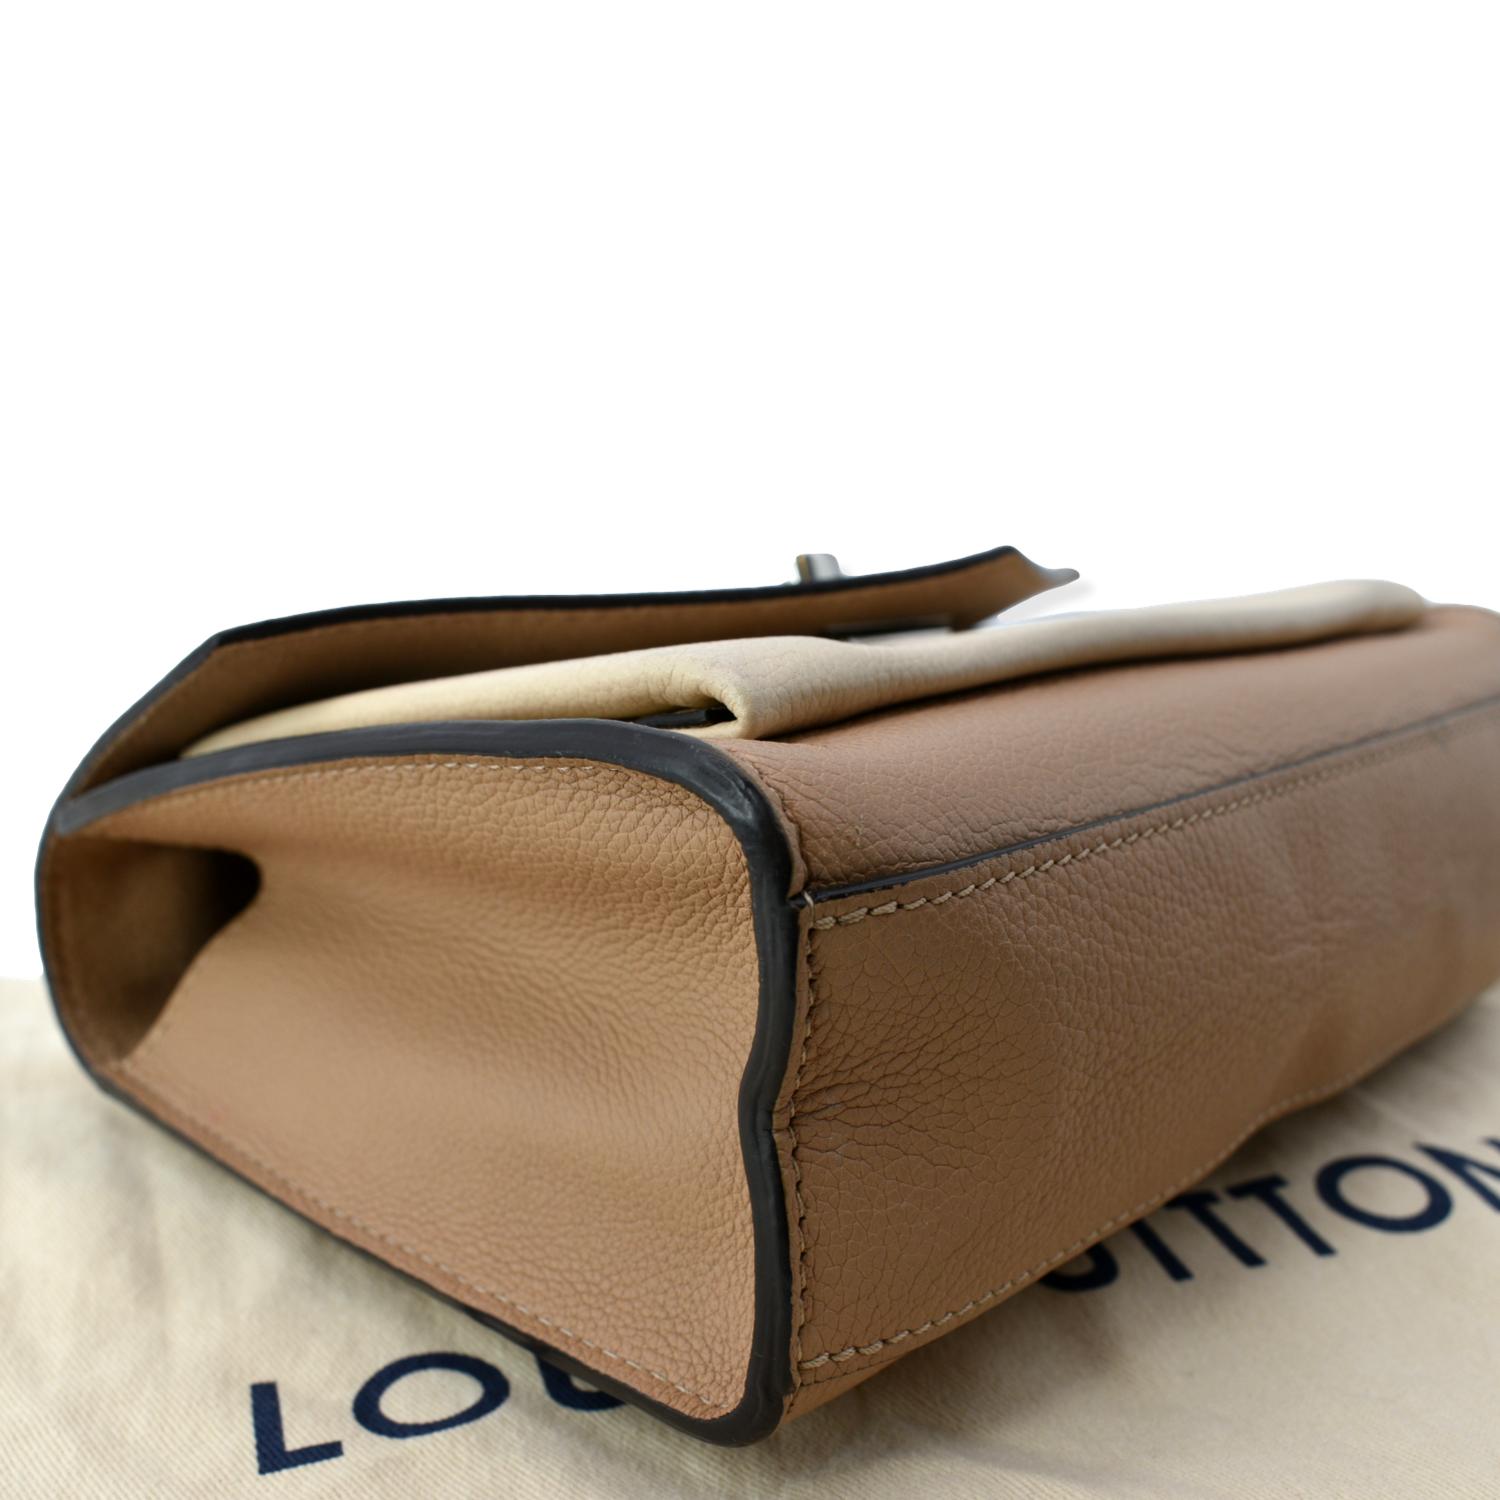 Mylockme leather handbag Louis Vuitton Black in Leather - 37345983